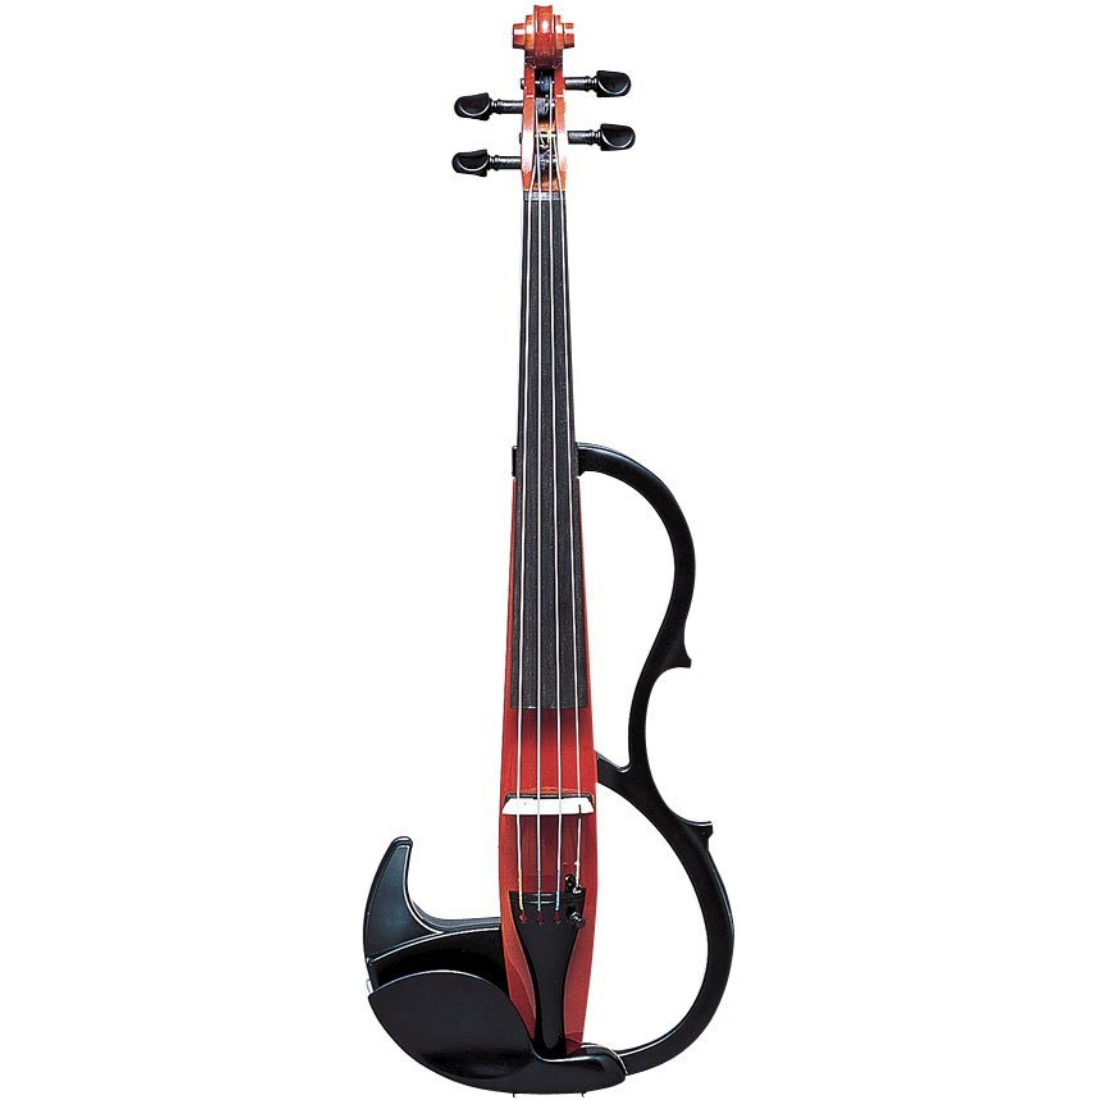 Black and reddish brown Yamaha professional silent solid-body violin